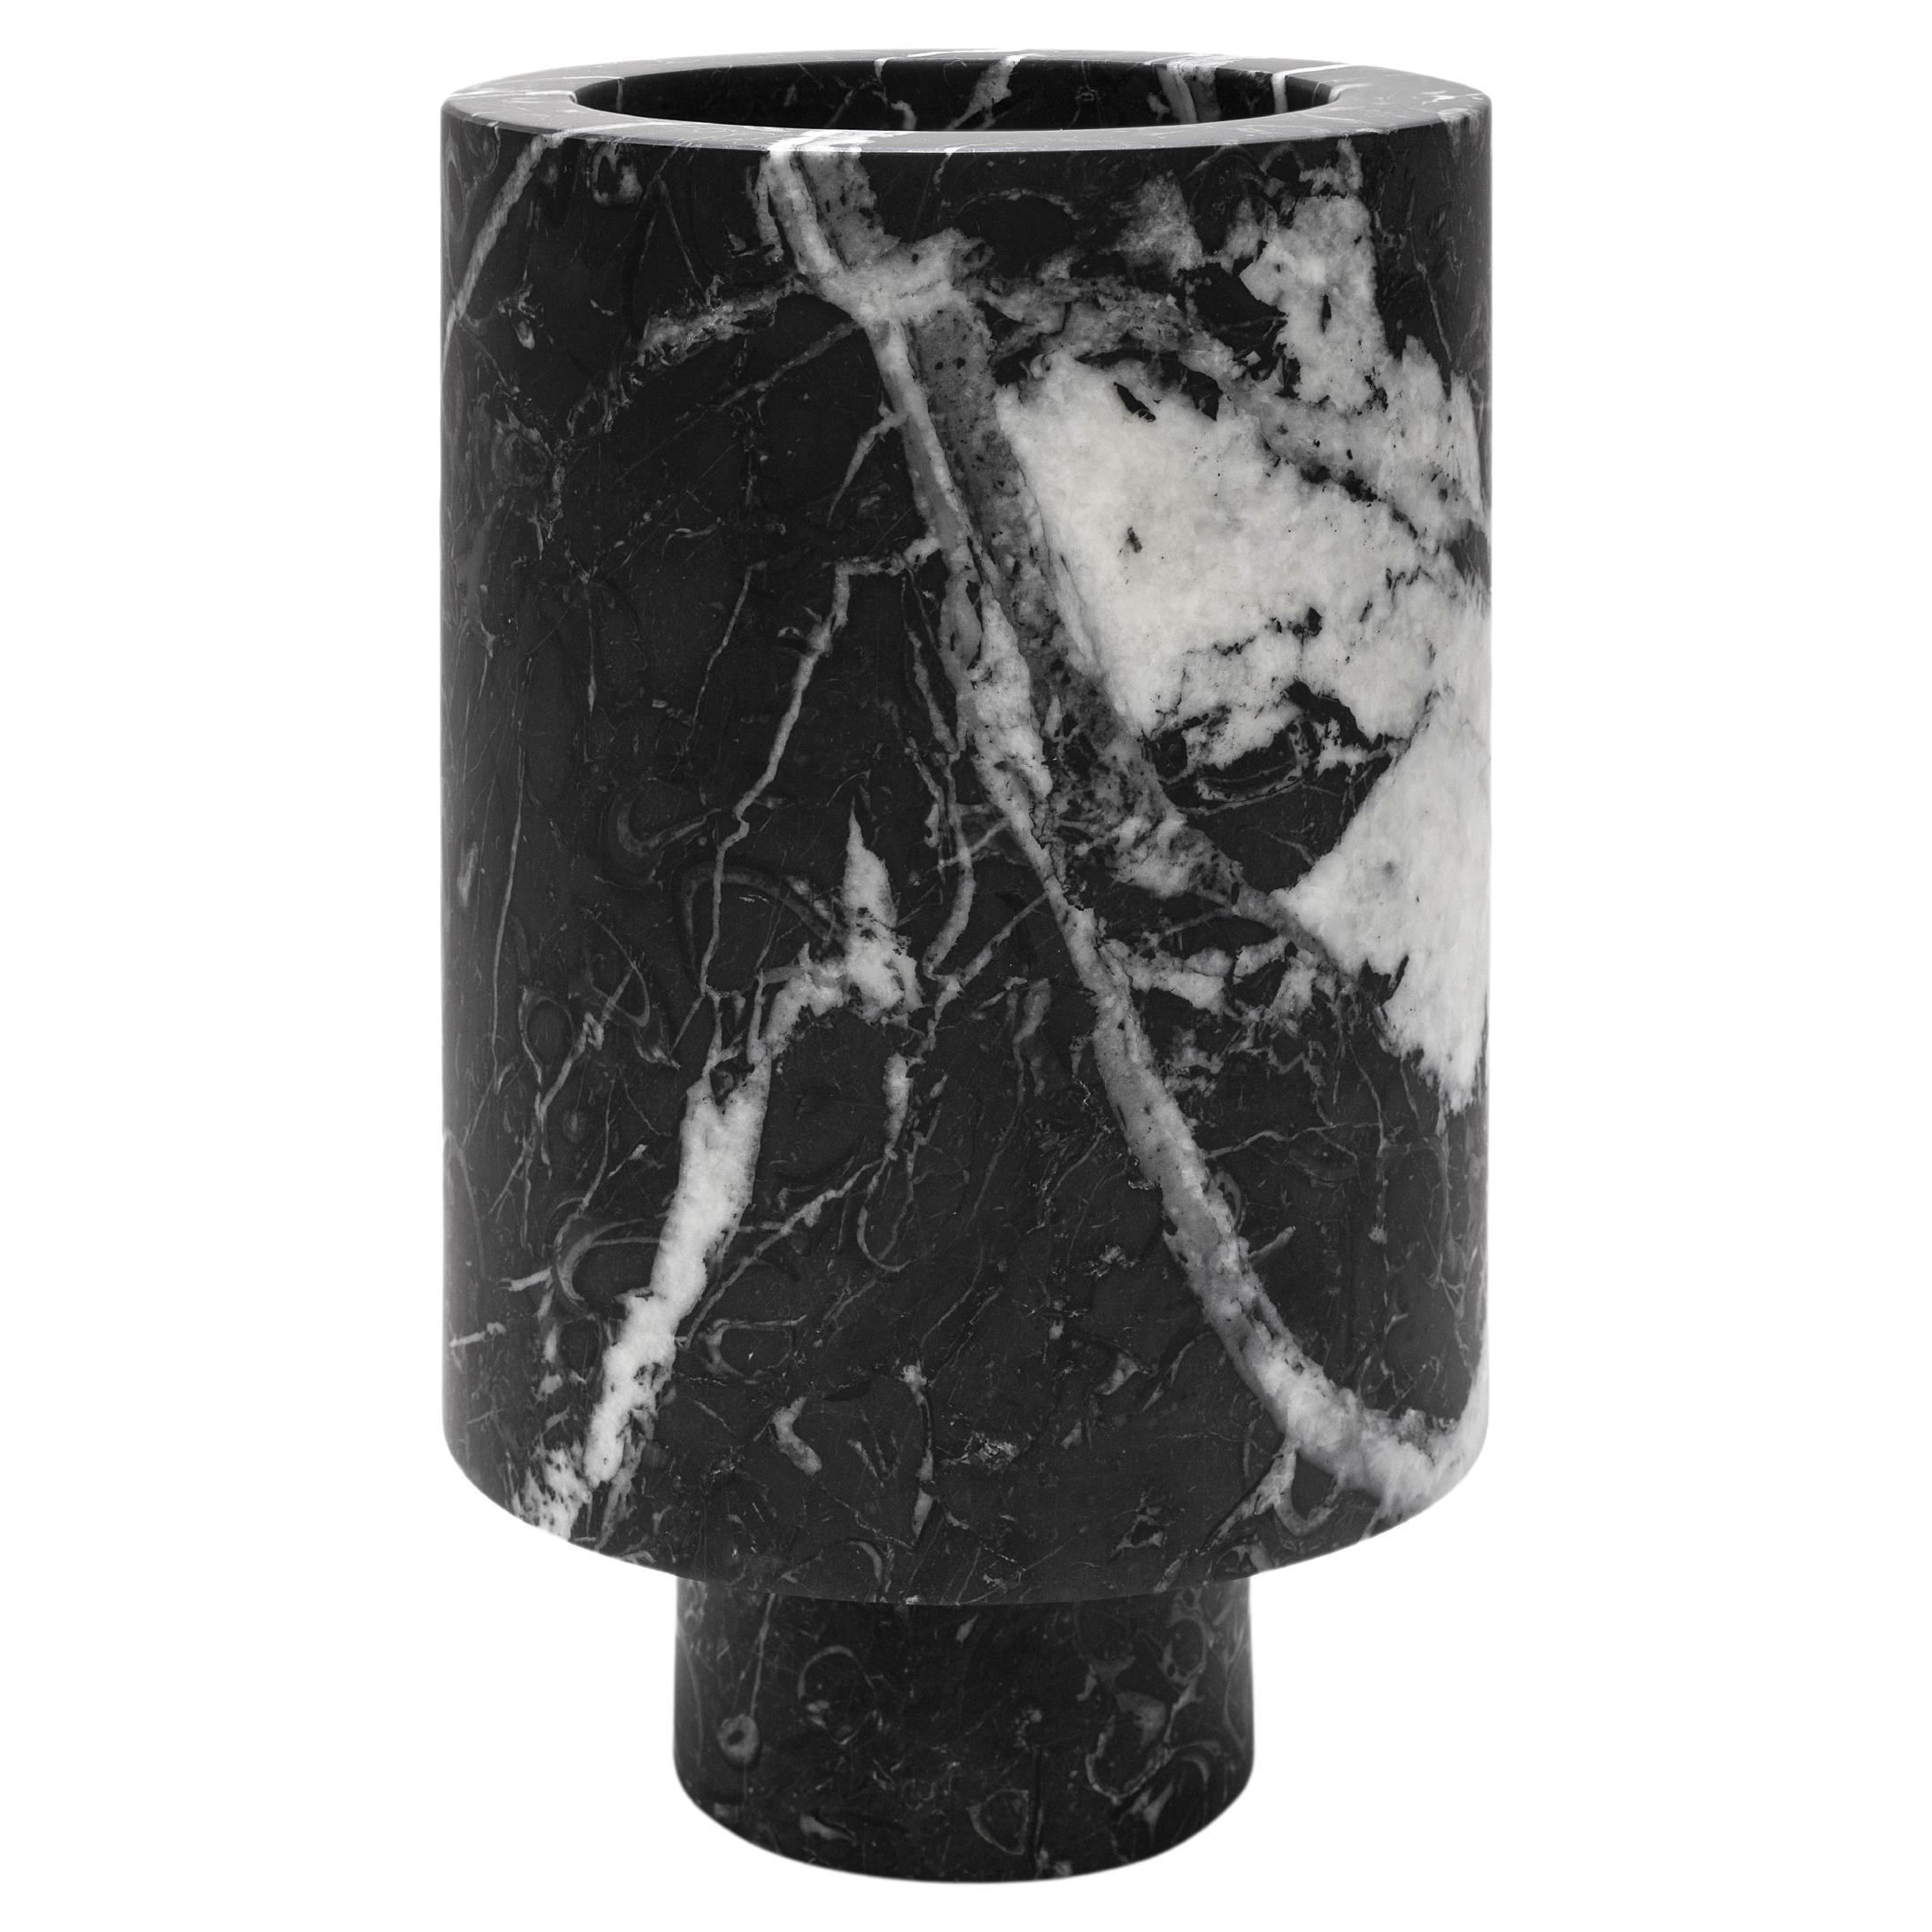 Flower Vase in Black Marble, by Karen Chekerdjian, Made in Italy